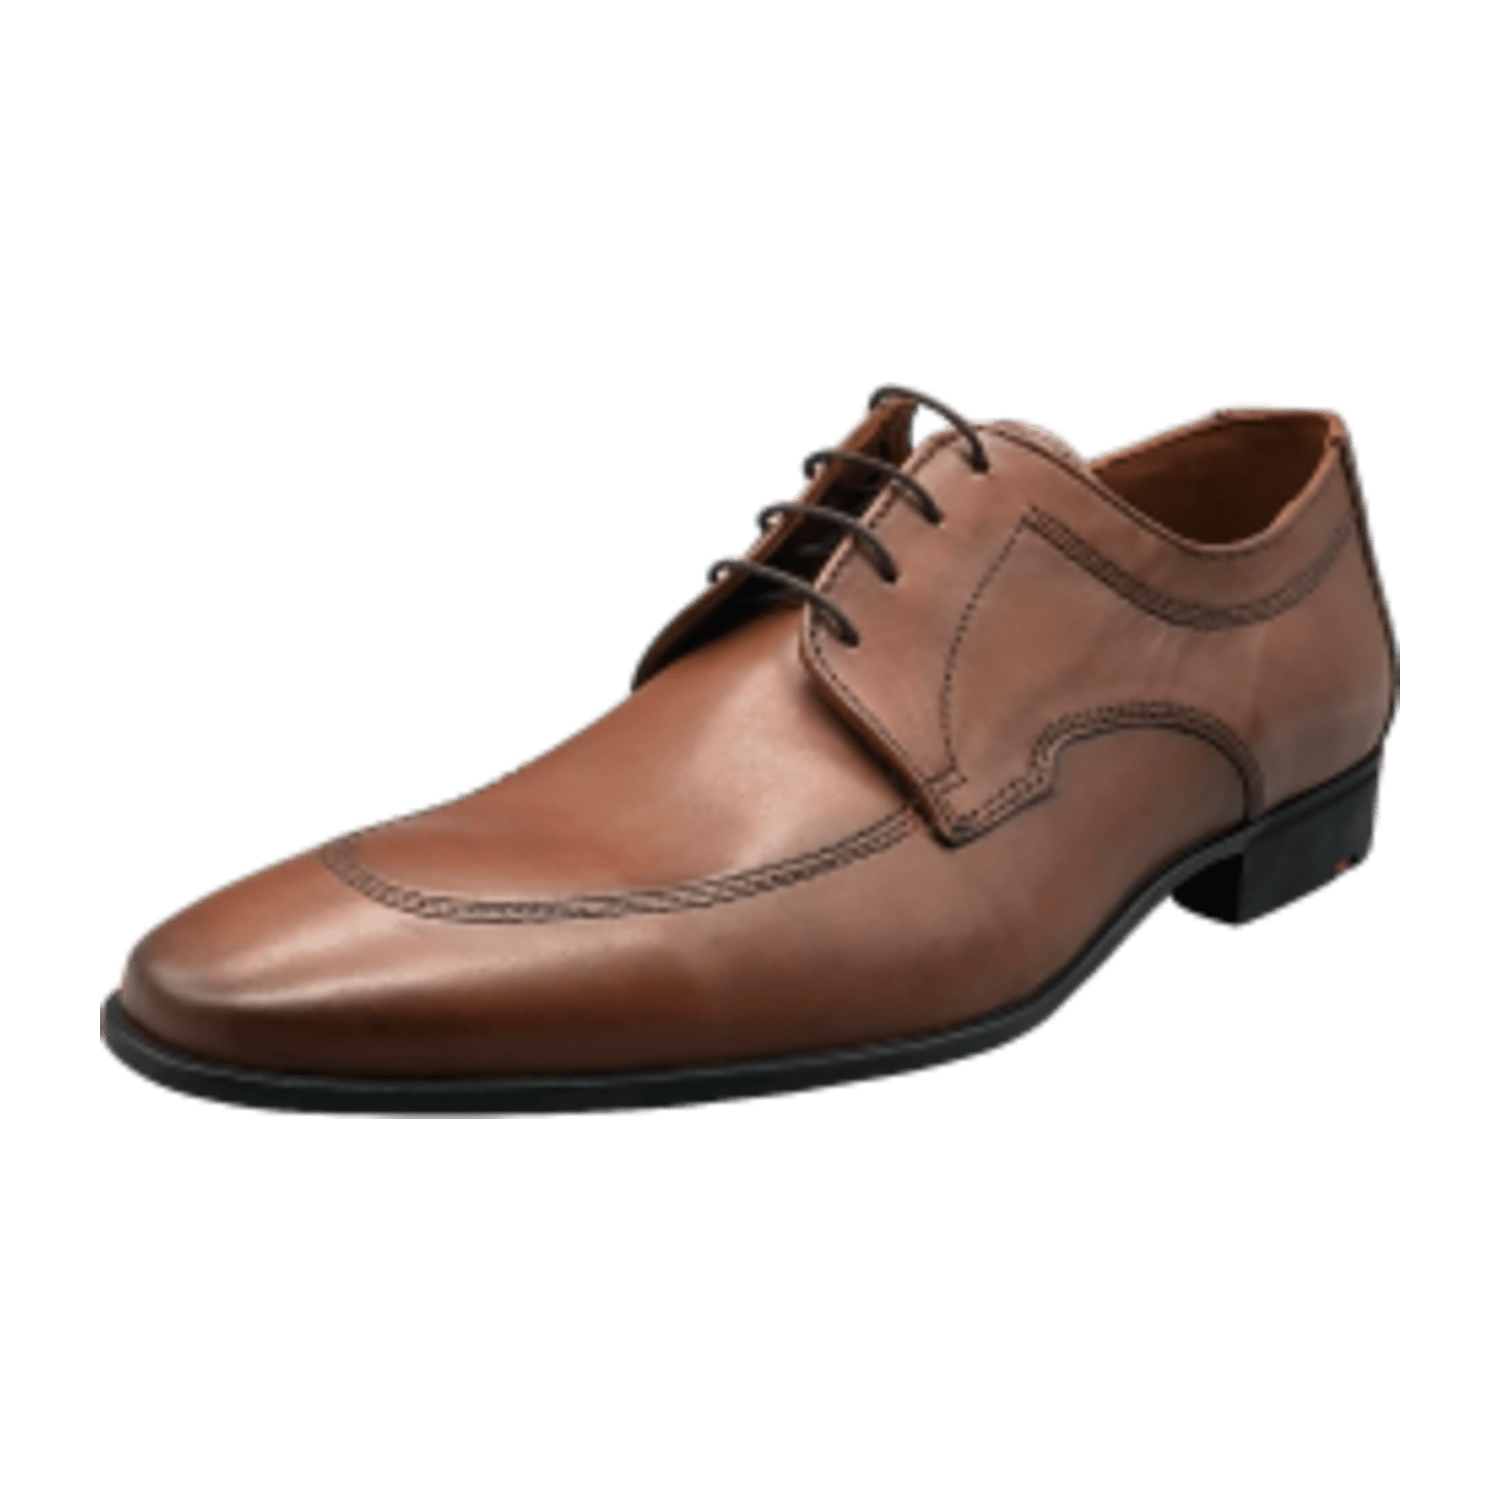 Lloyd ORIOLA Business Schuhe braun 22-739-04